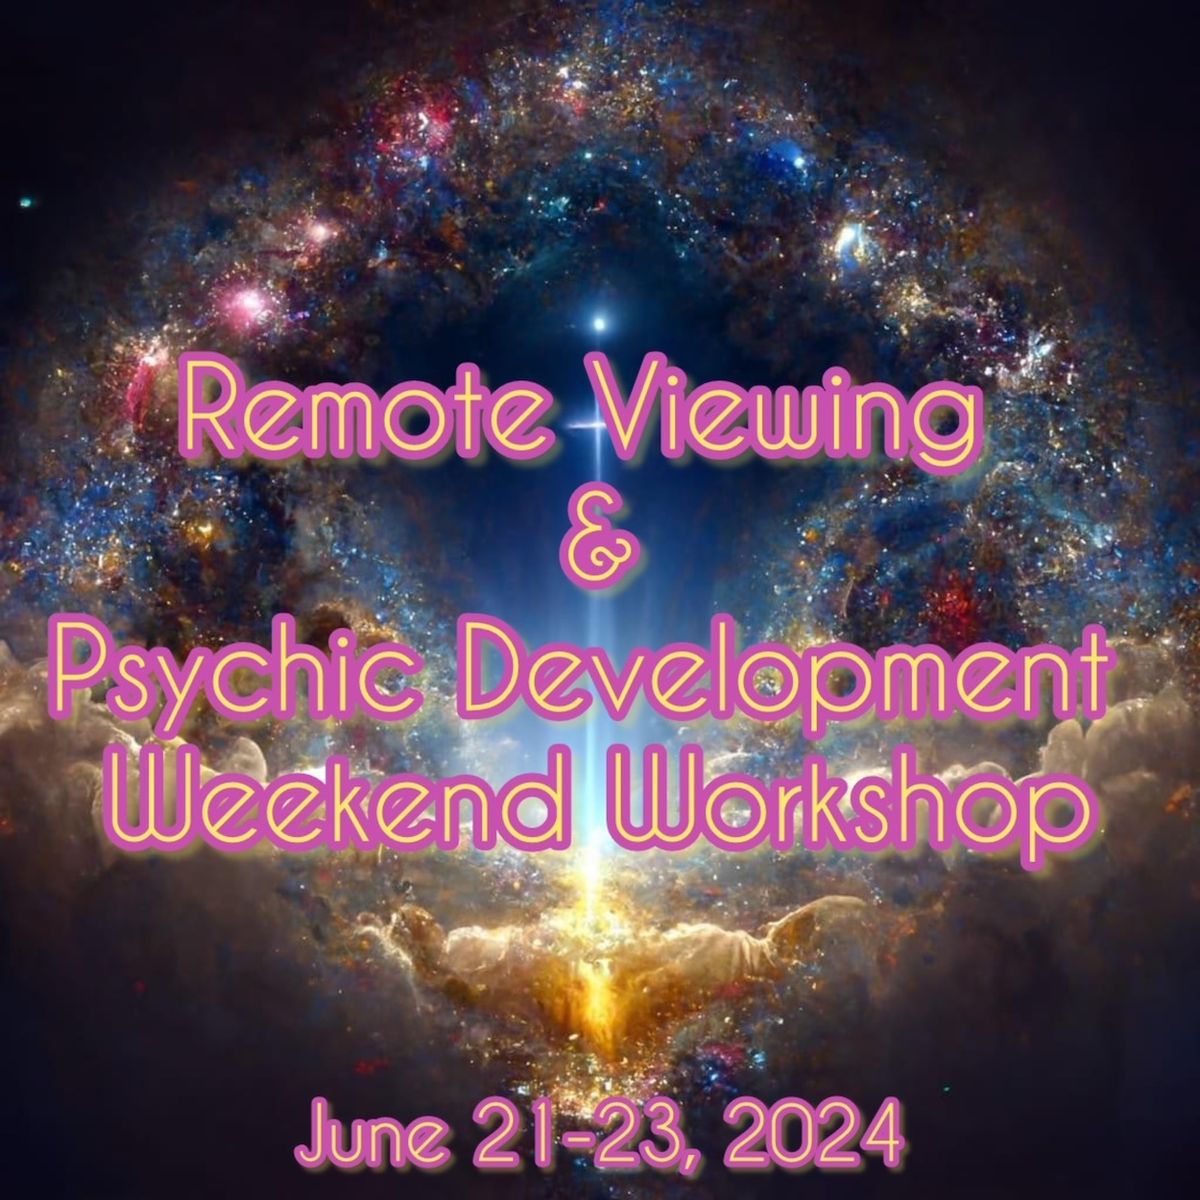 REMOTE VIEWING & PSYCHIC DEVELOPMENT WEEKEND WORKSHOP IN STUDIO